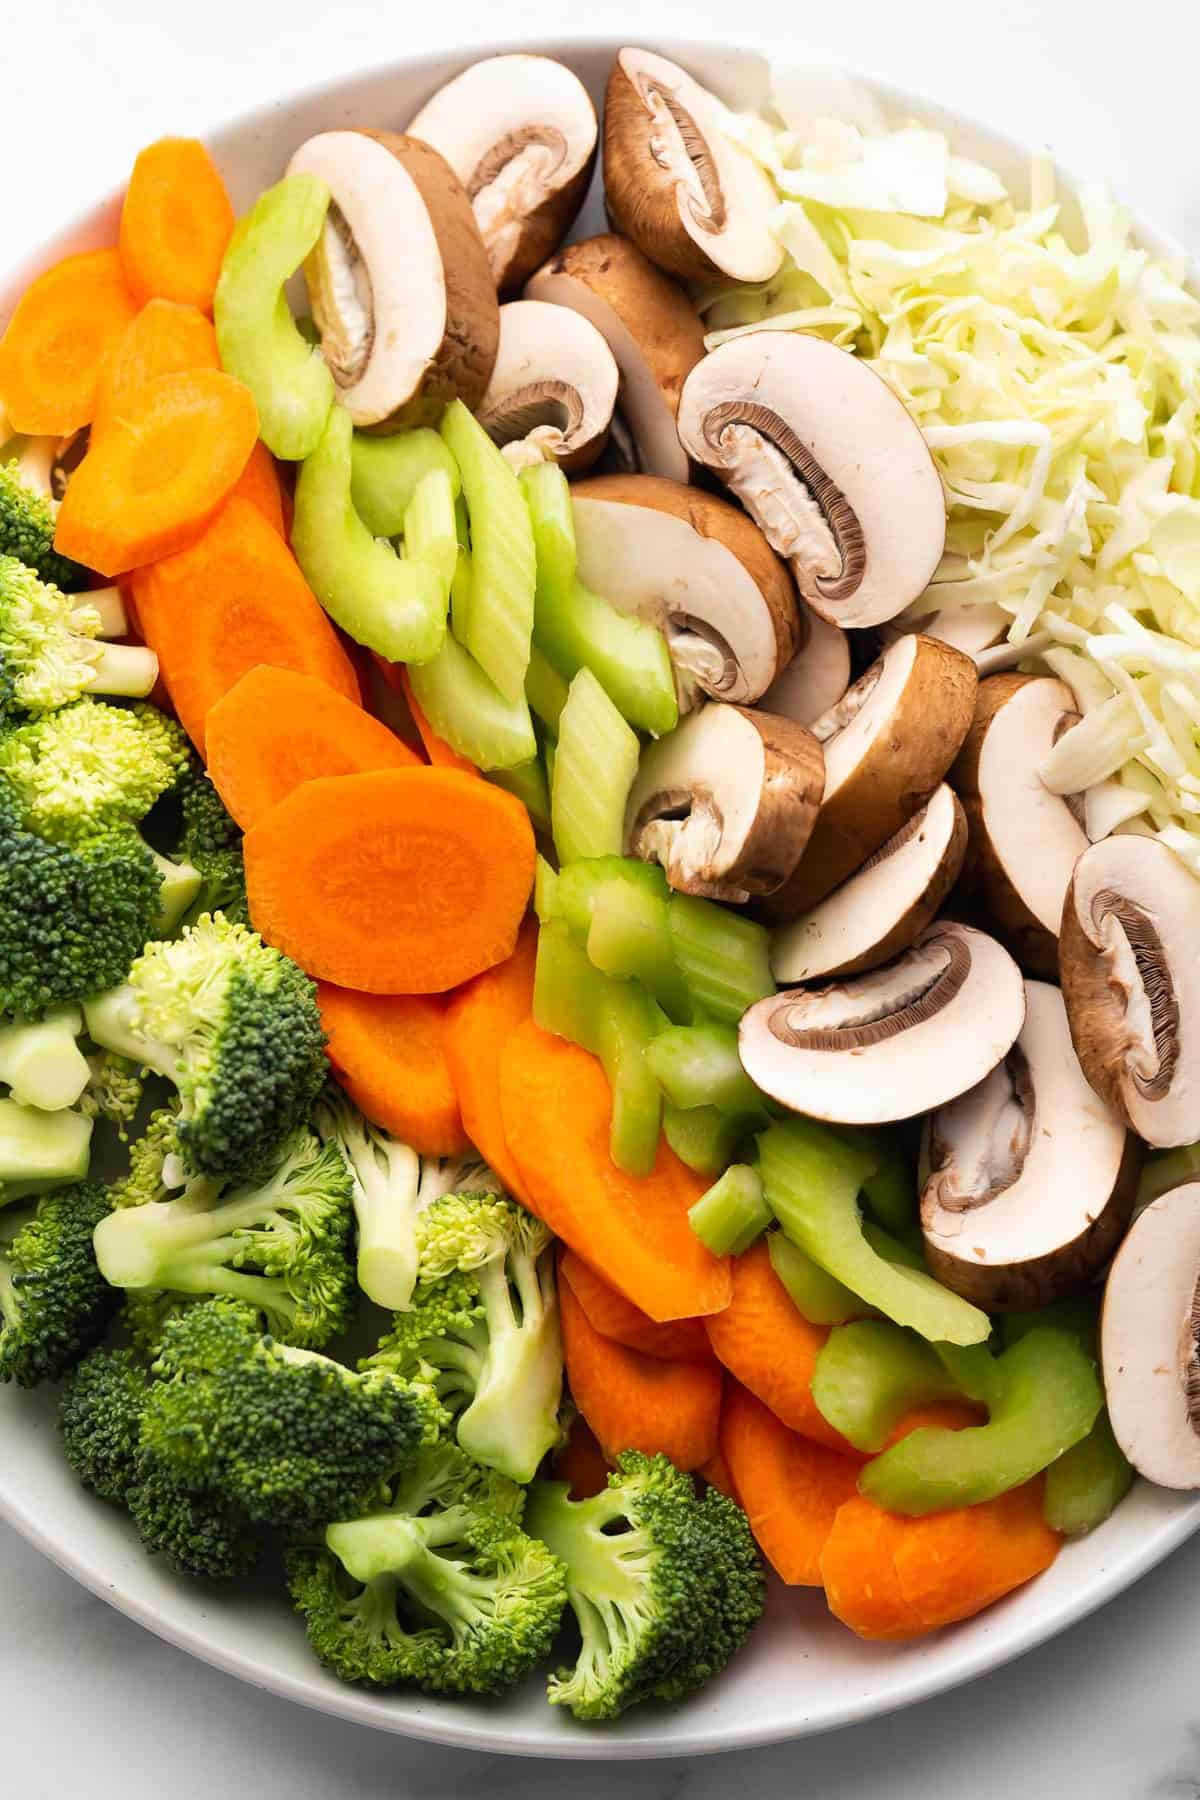 Prepared broccoli florets, carrot, celery, mushrooms, and cabbage for making vegetable teriyaki.